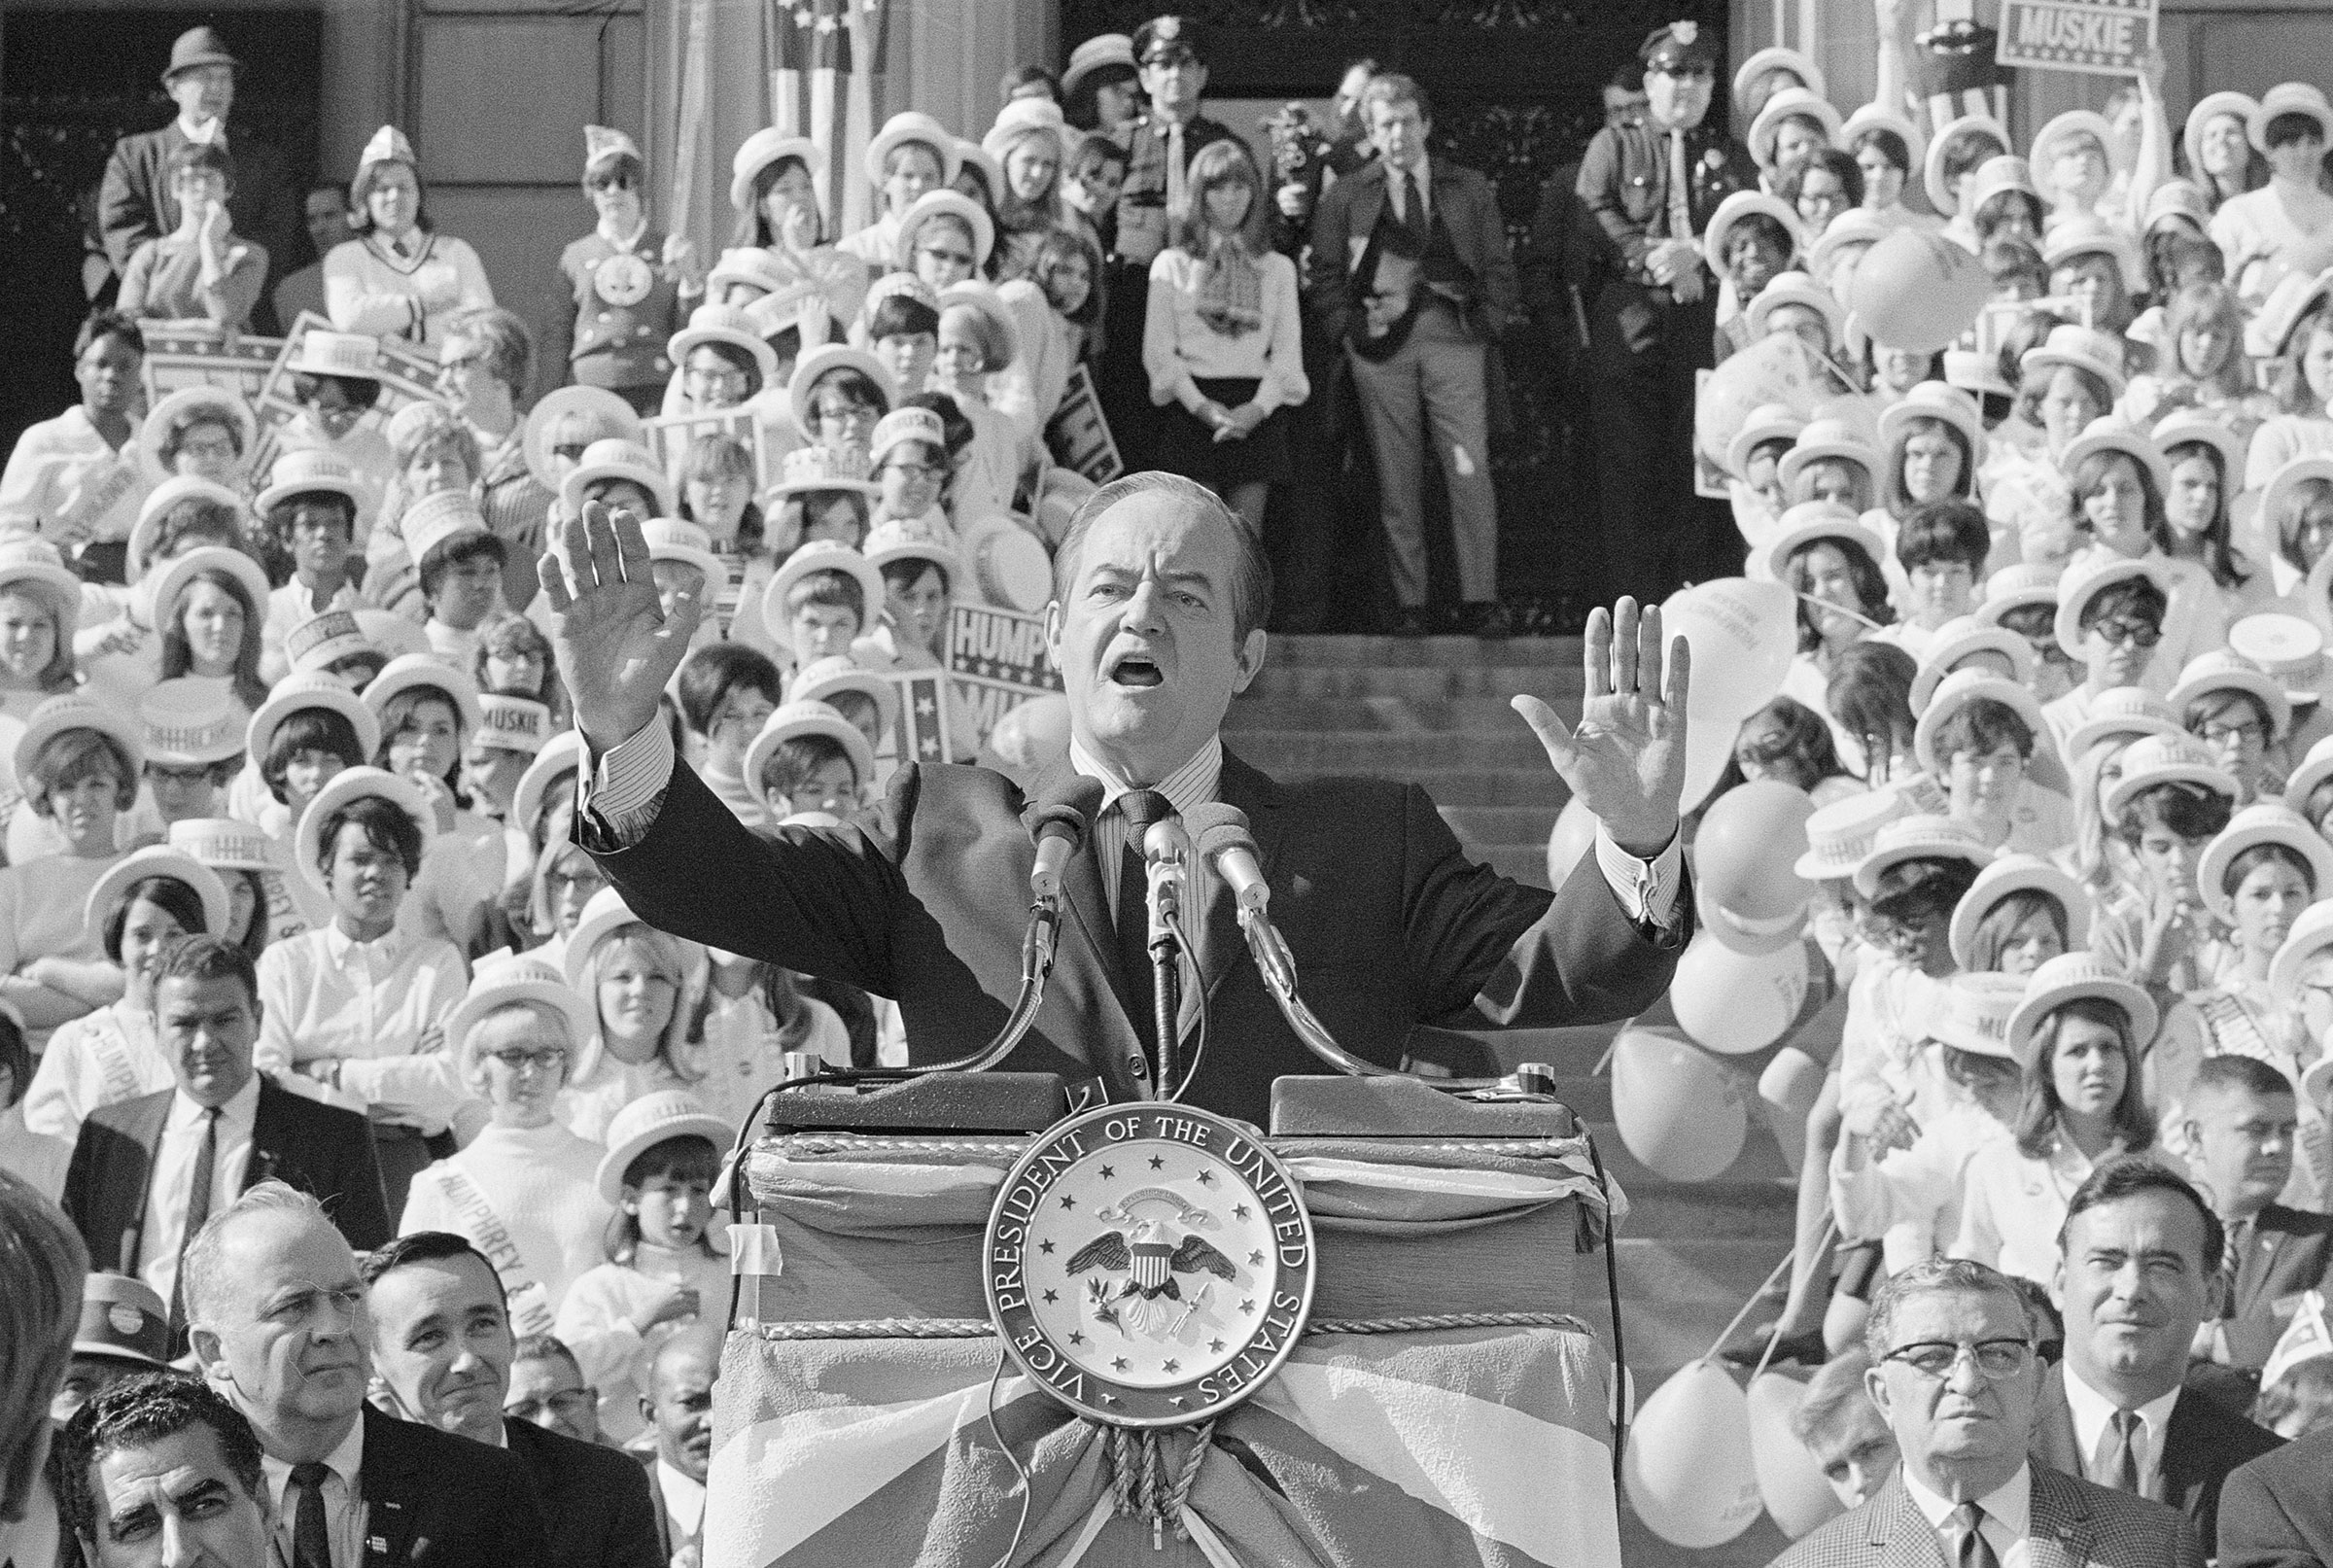 Hubert Humphrey Speaking at Podium with a crowd behind him